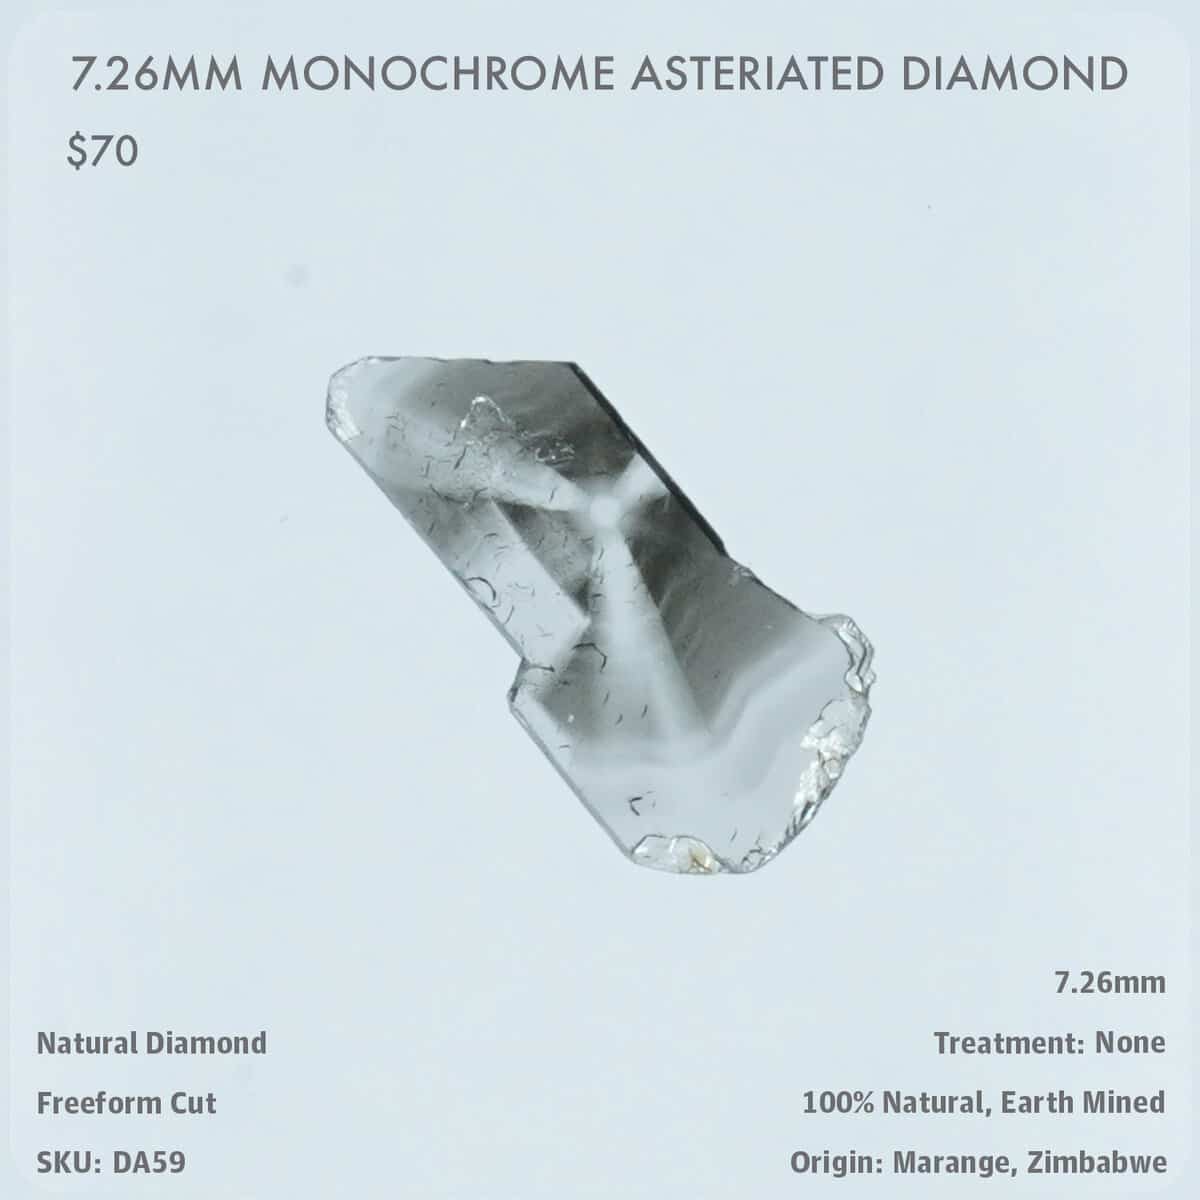 7.26mm Monochrome Asteriated Diamond